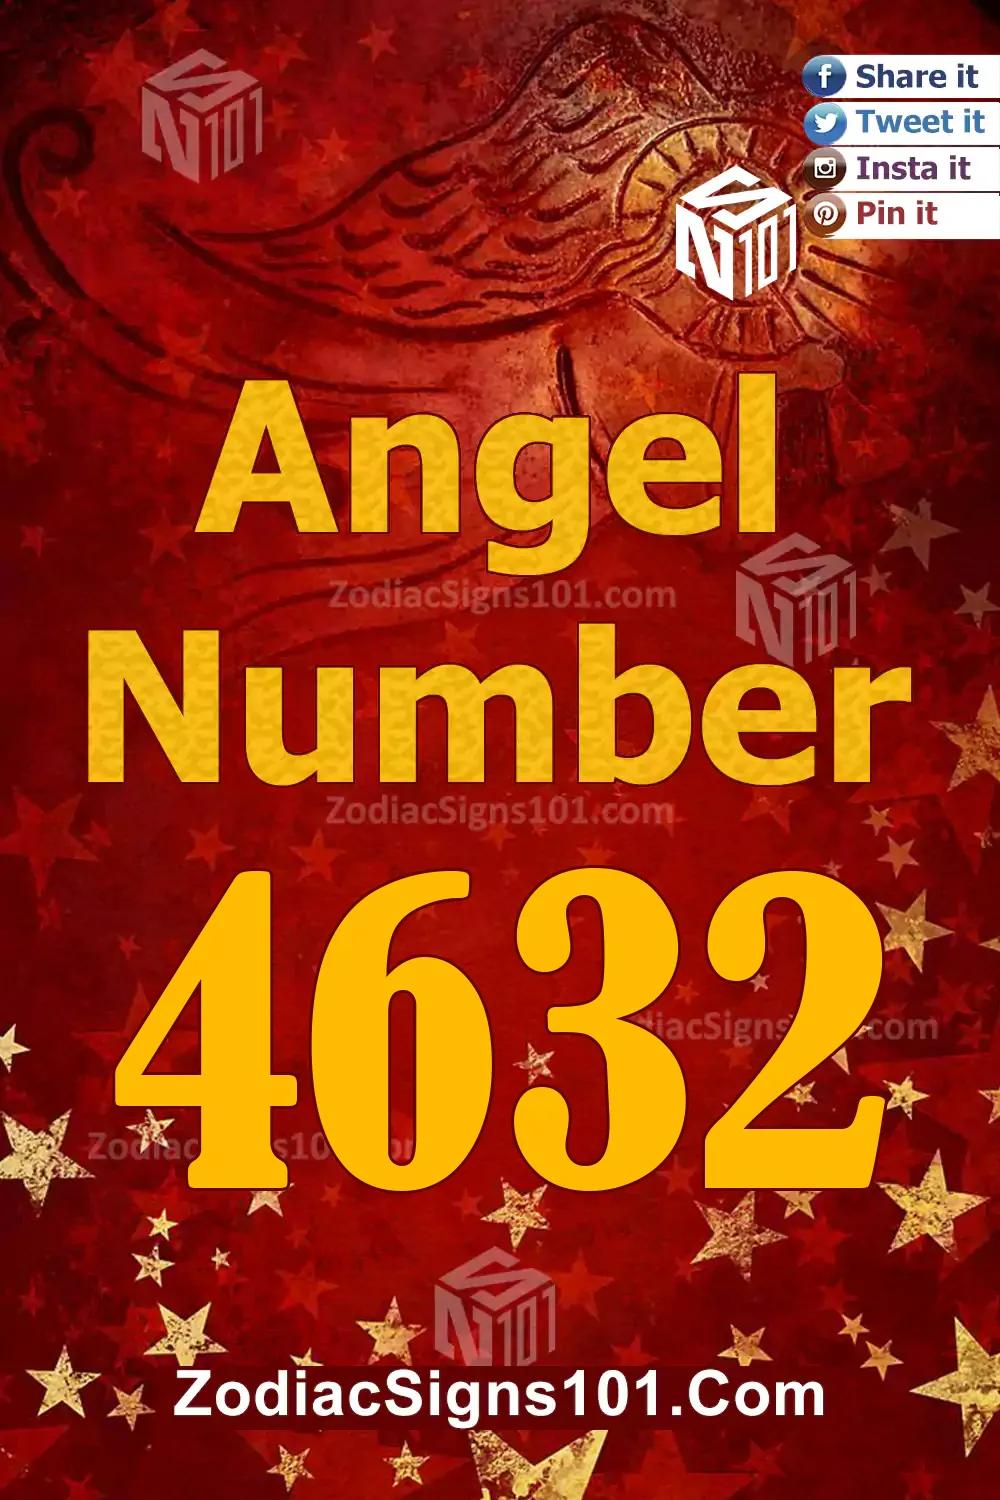 4632-Angel-Number-Meaning.jpg